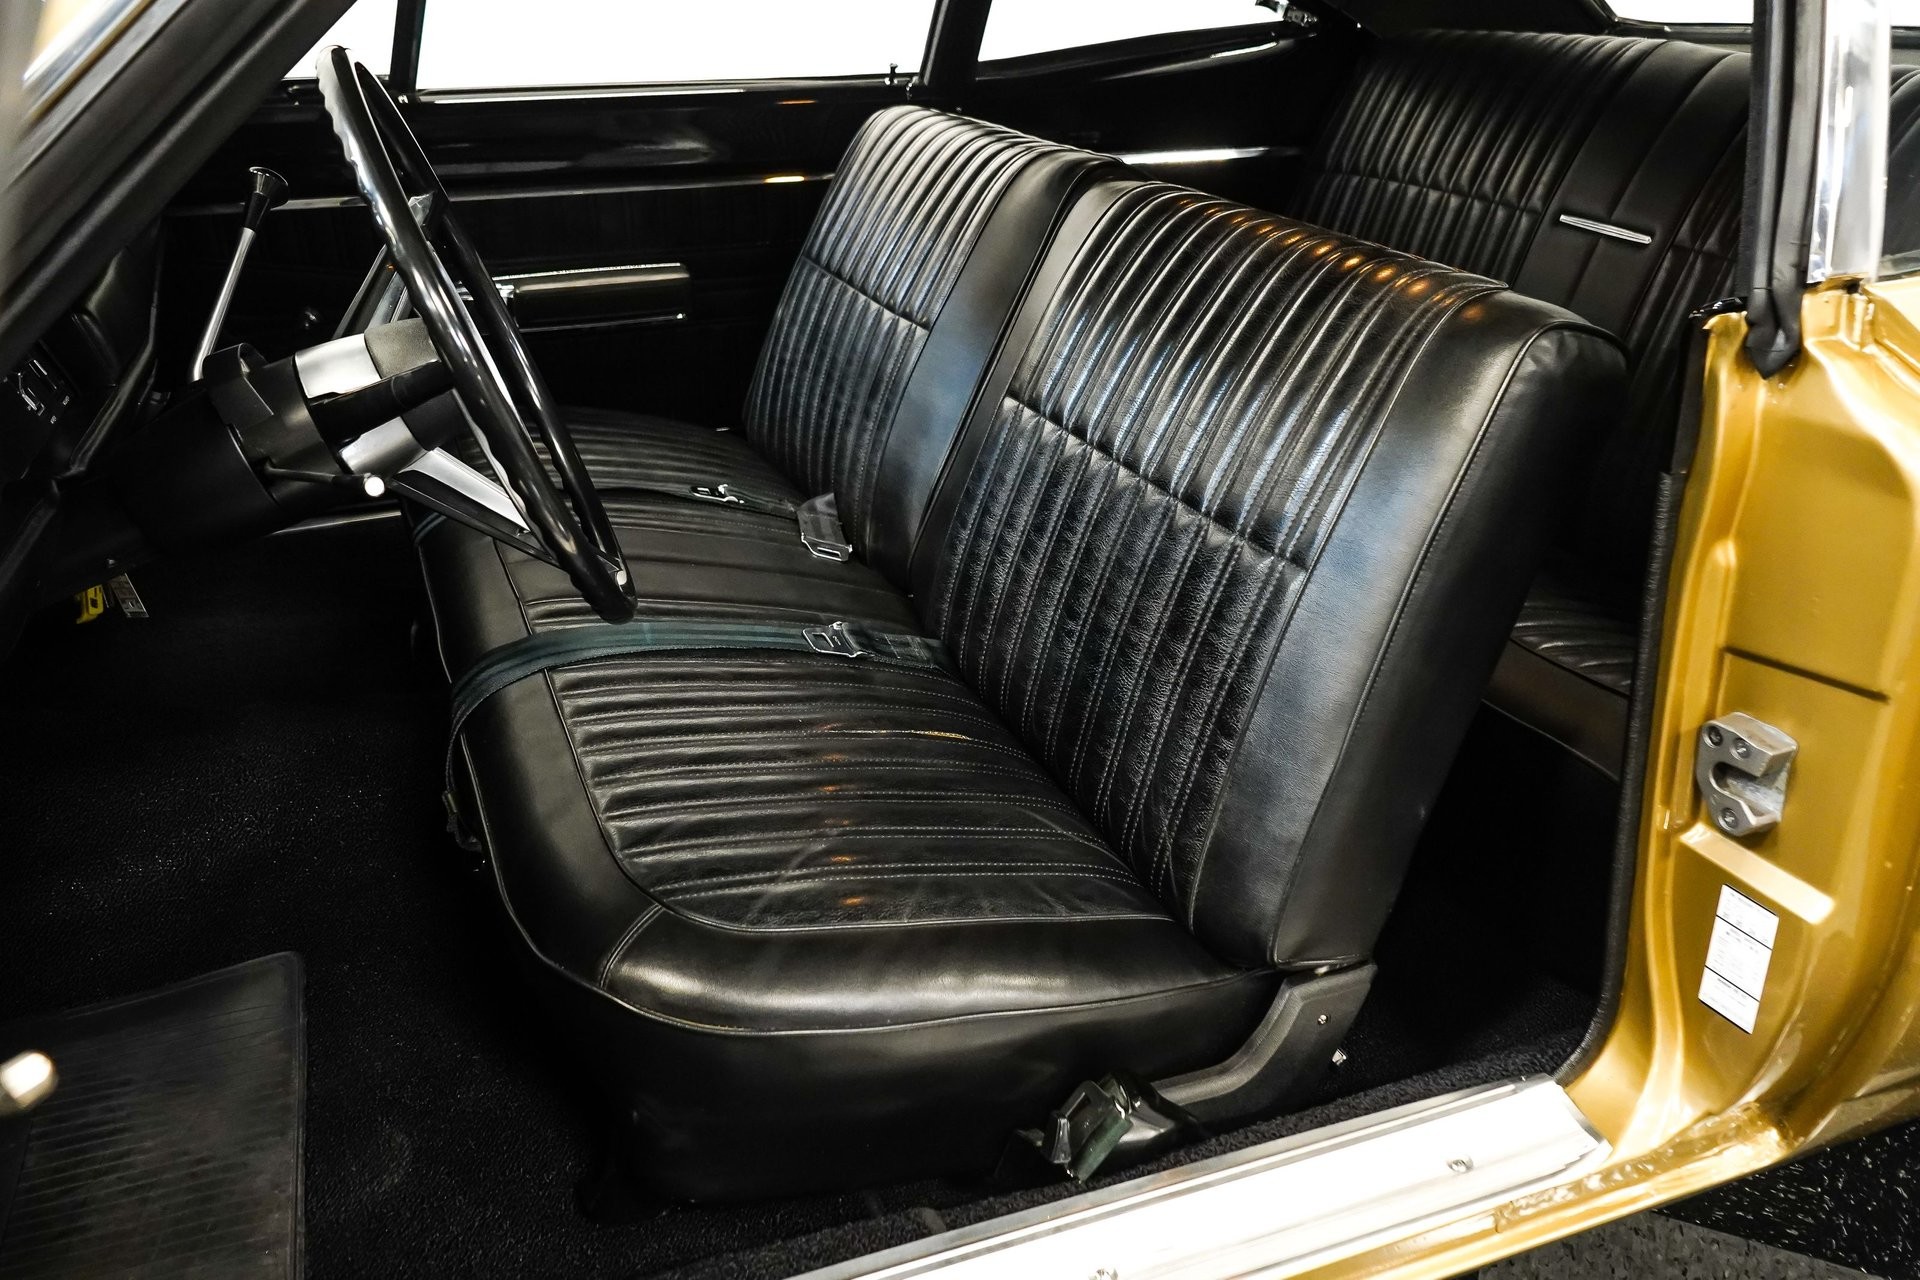 Забытый 53-летний маслкар Dodge Coronet Super Bee 